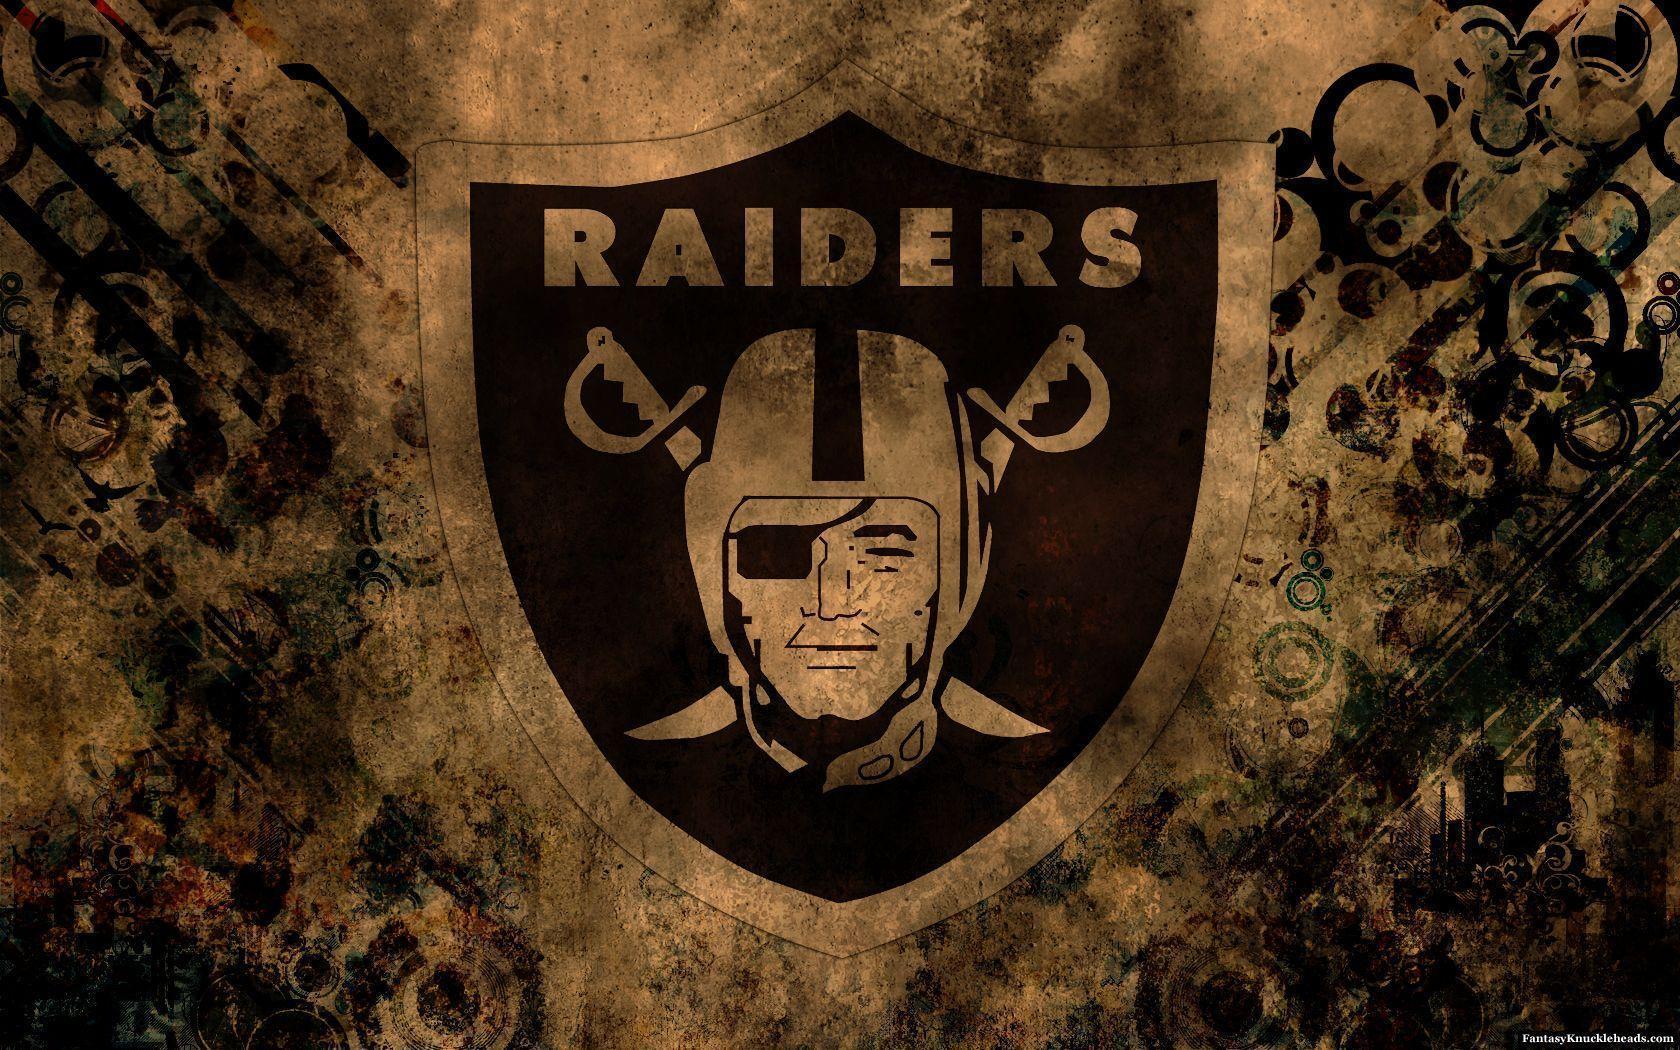 Raiders 2016 Wallpaper